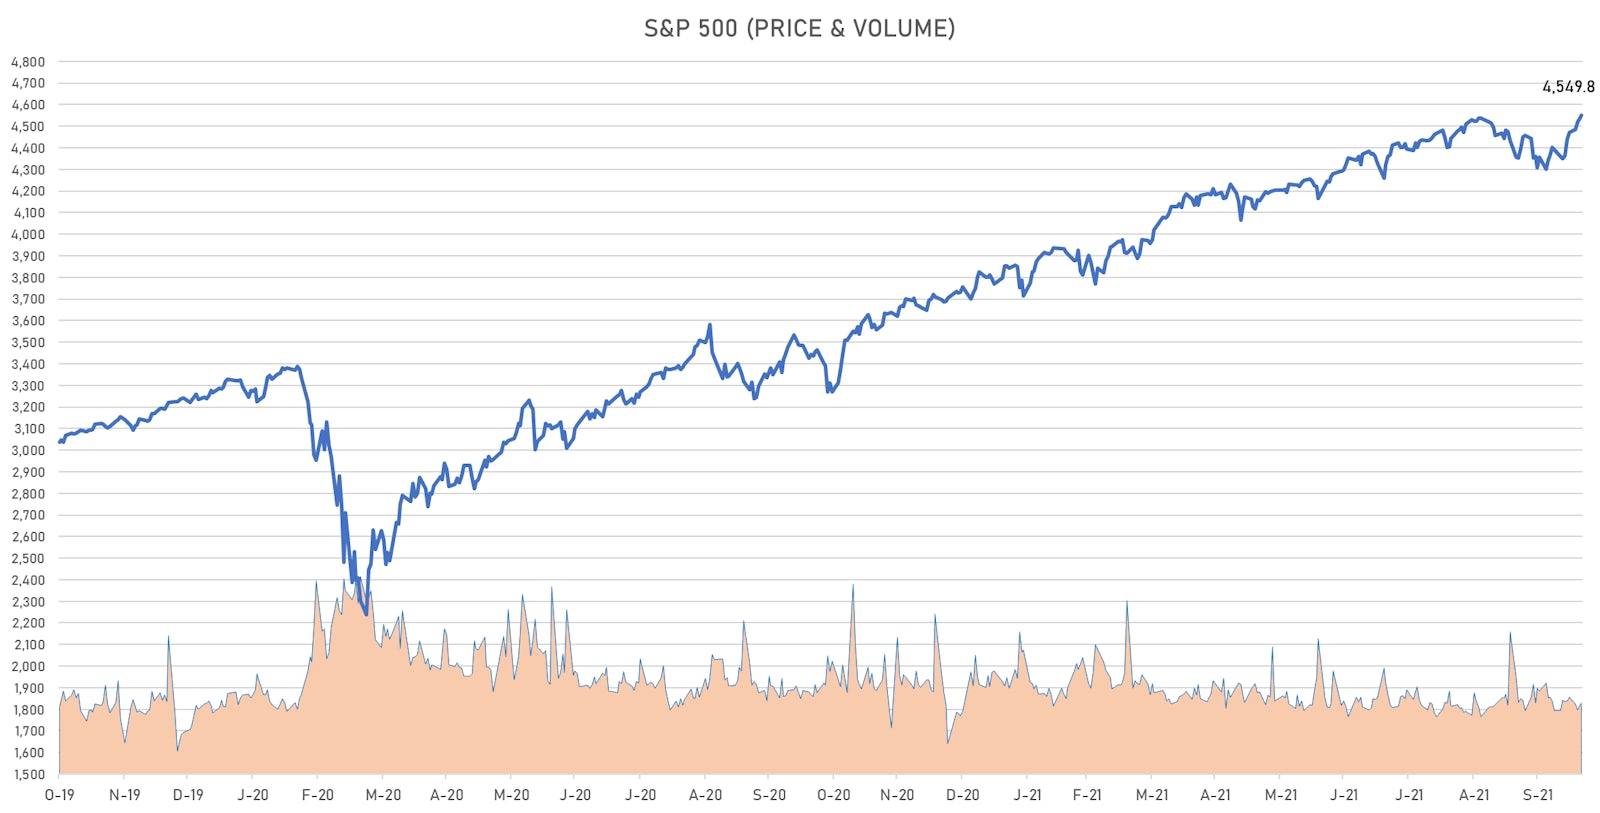 S&P 500 Price & Volume | Sources: ϕpost, Refinitiv data